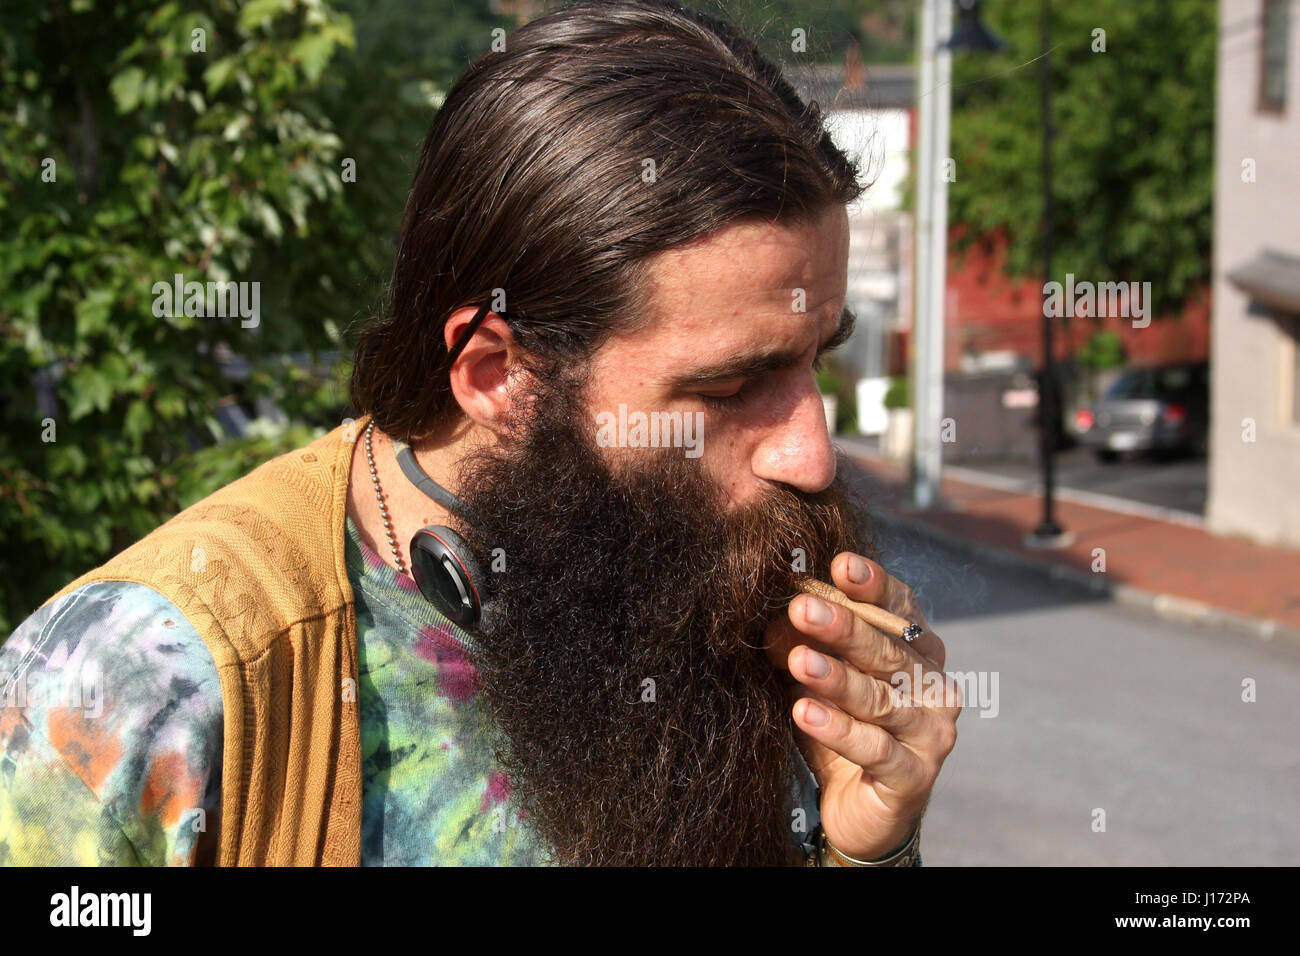 Man with long hair and beard, smoking on the street Stock Photo